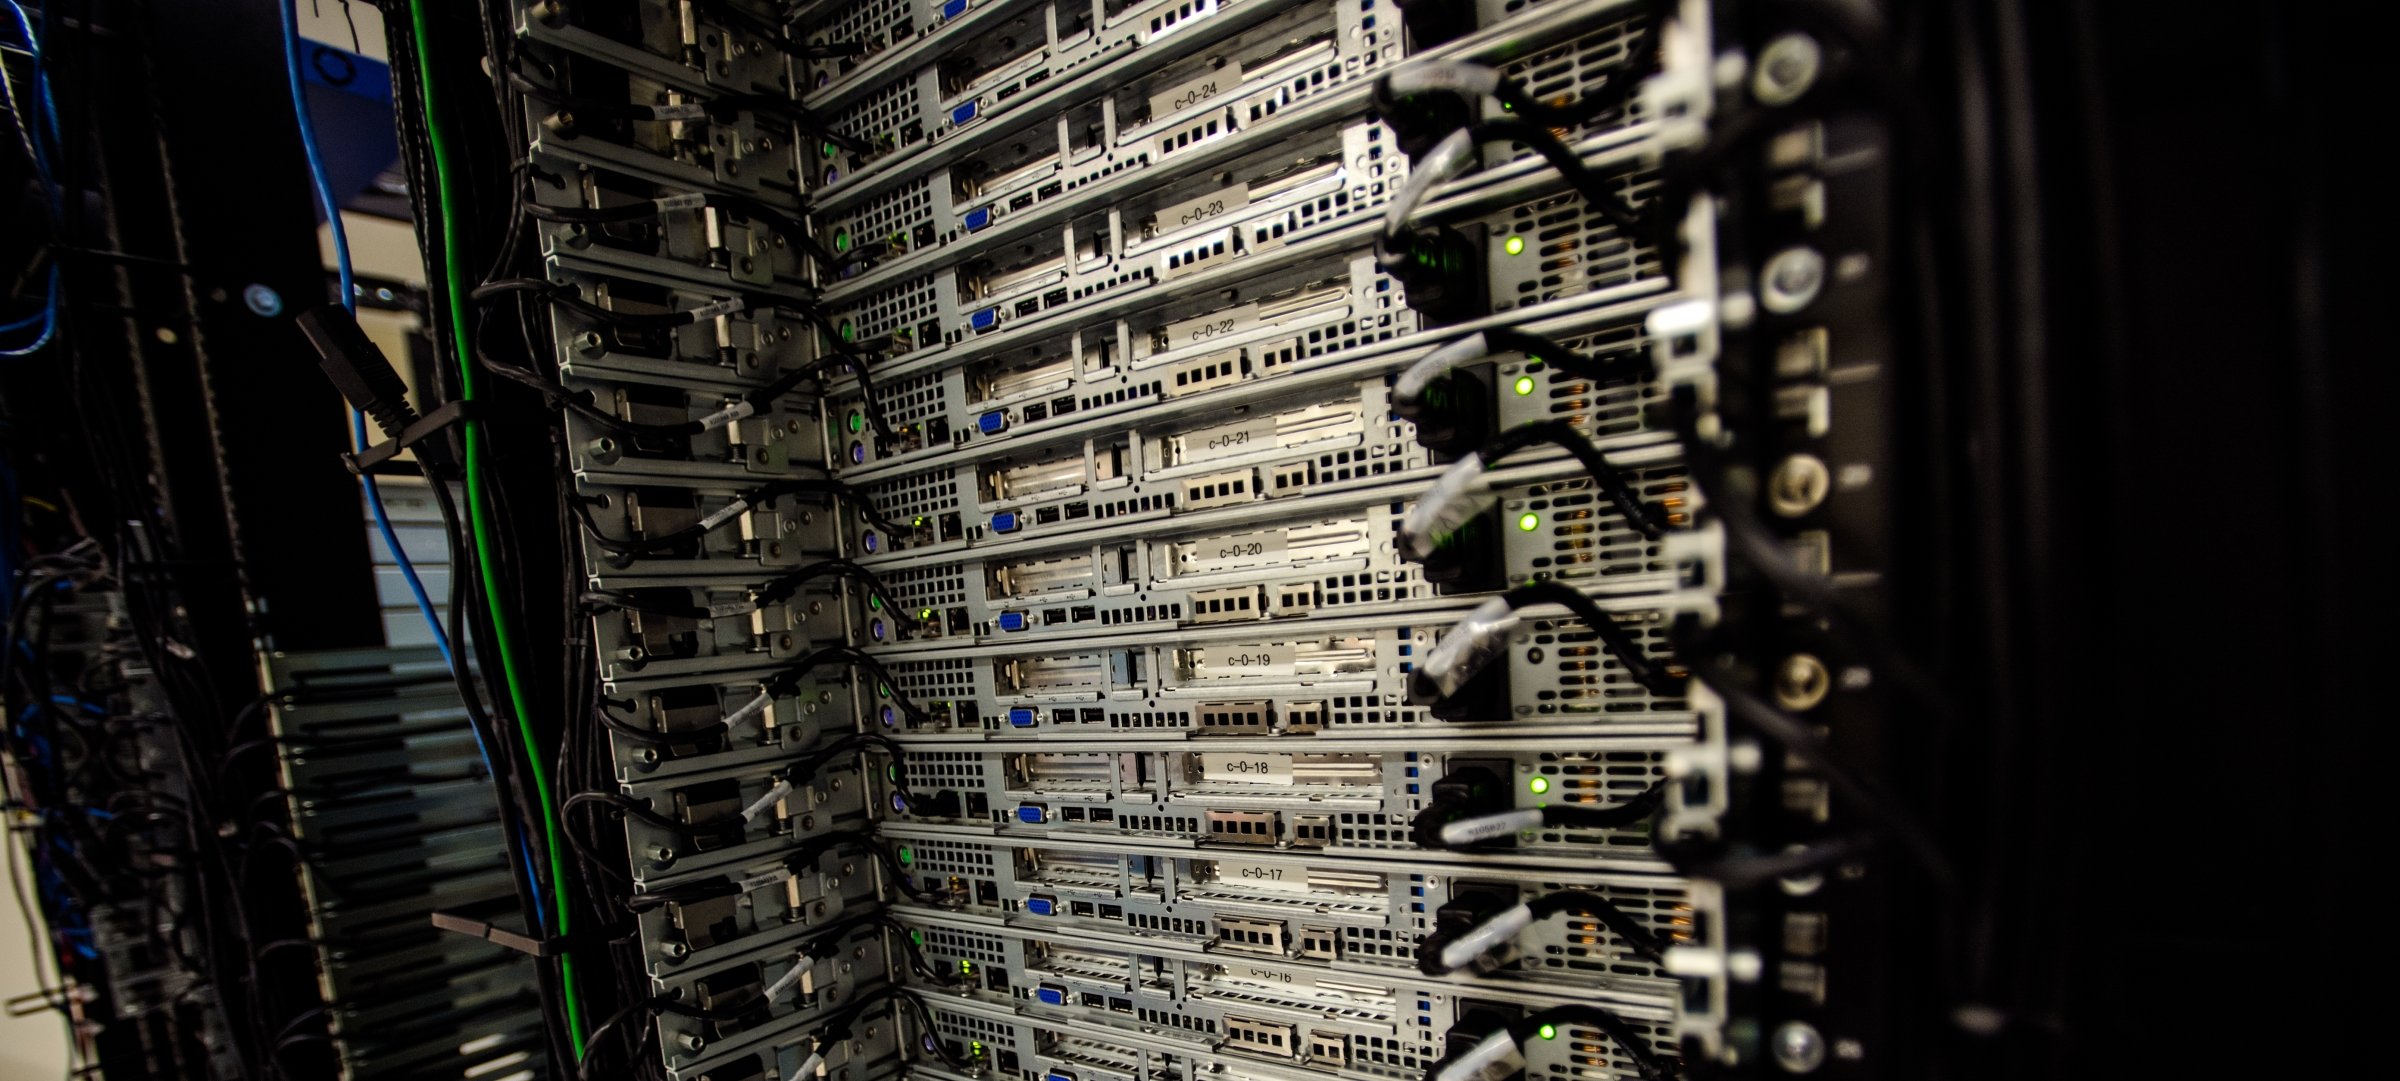 Server tower inside computing lab.